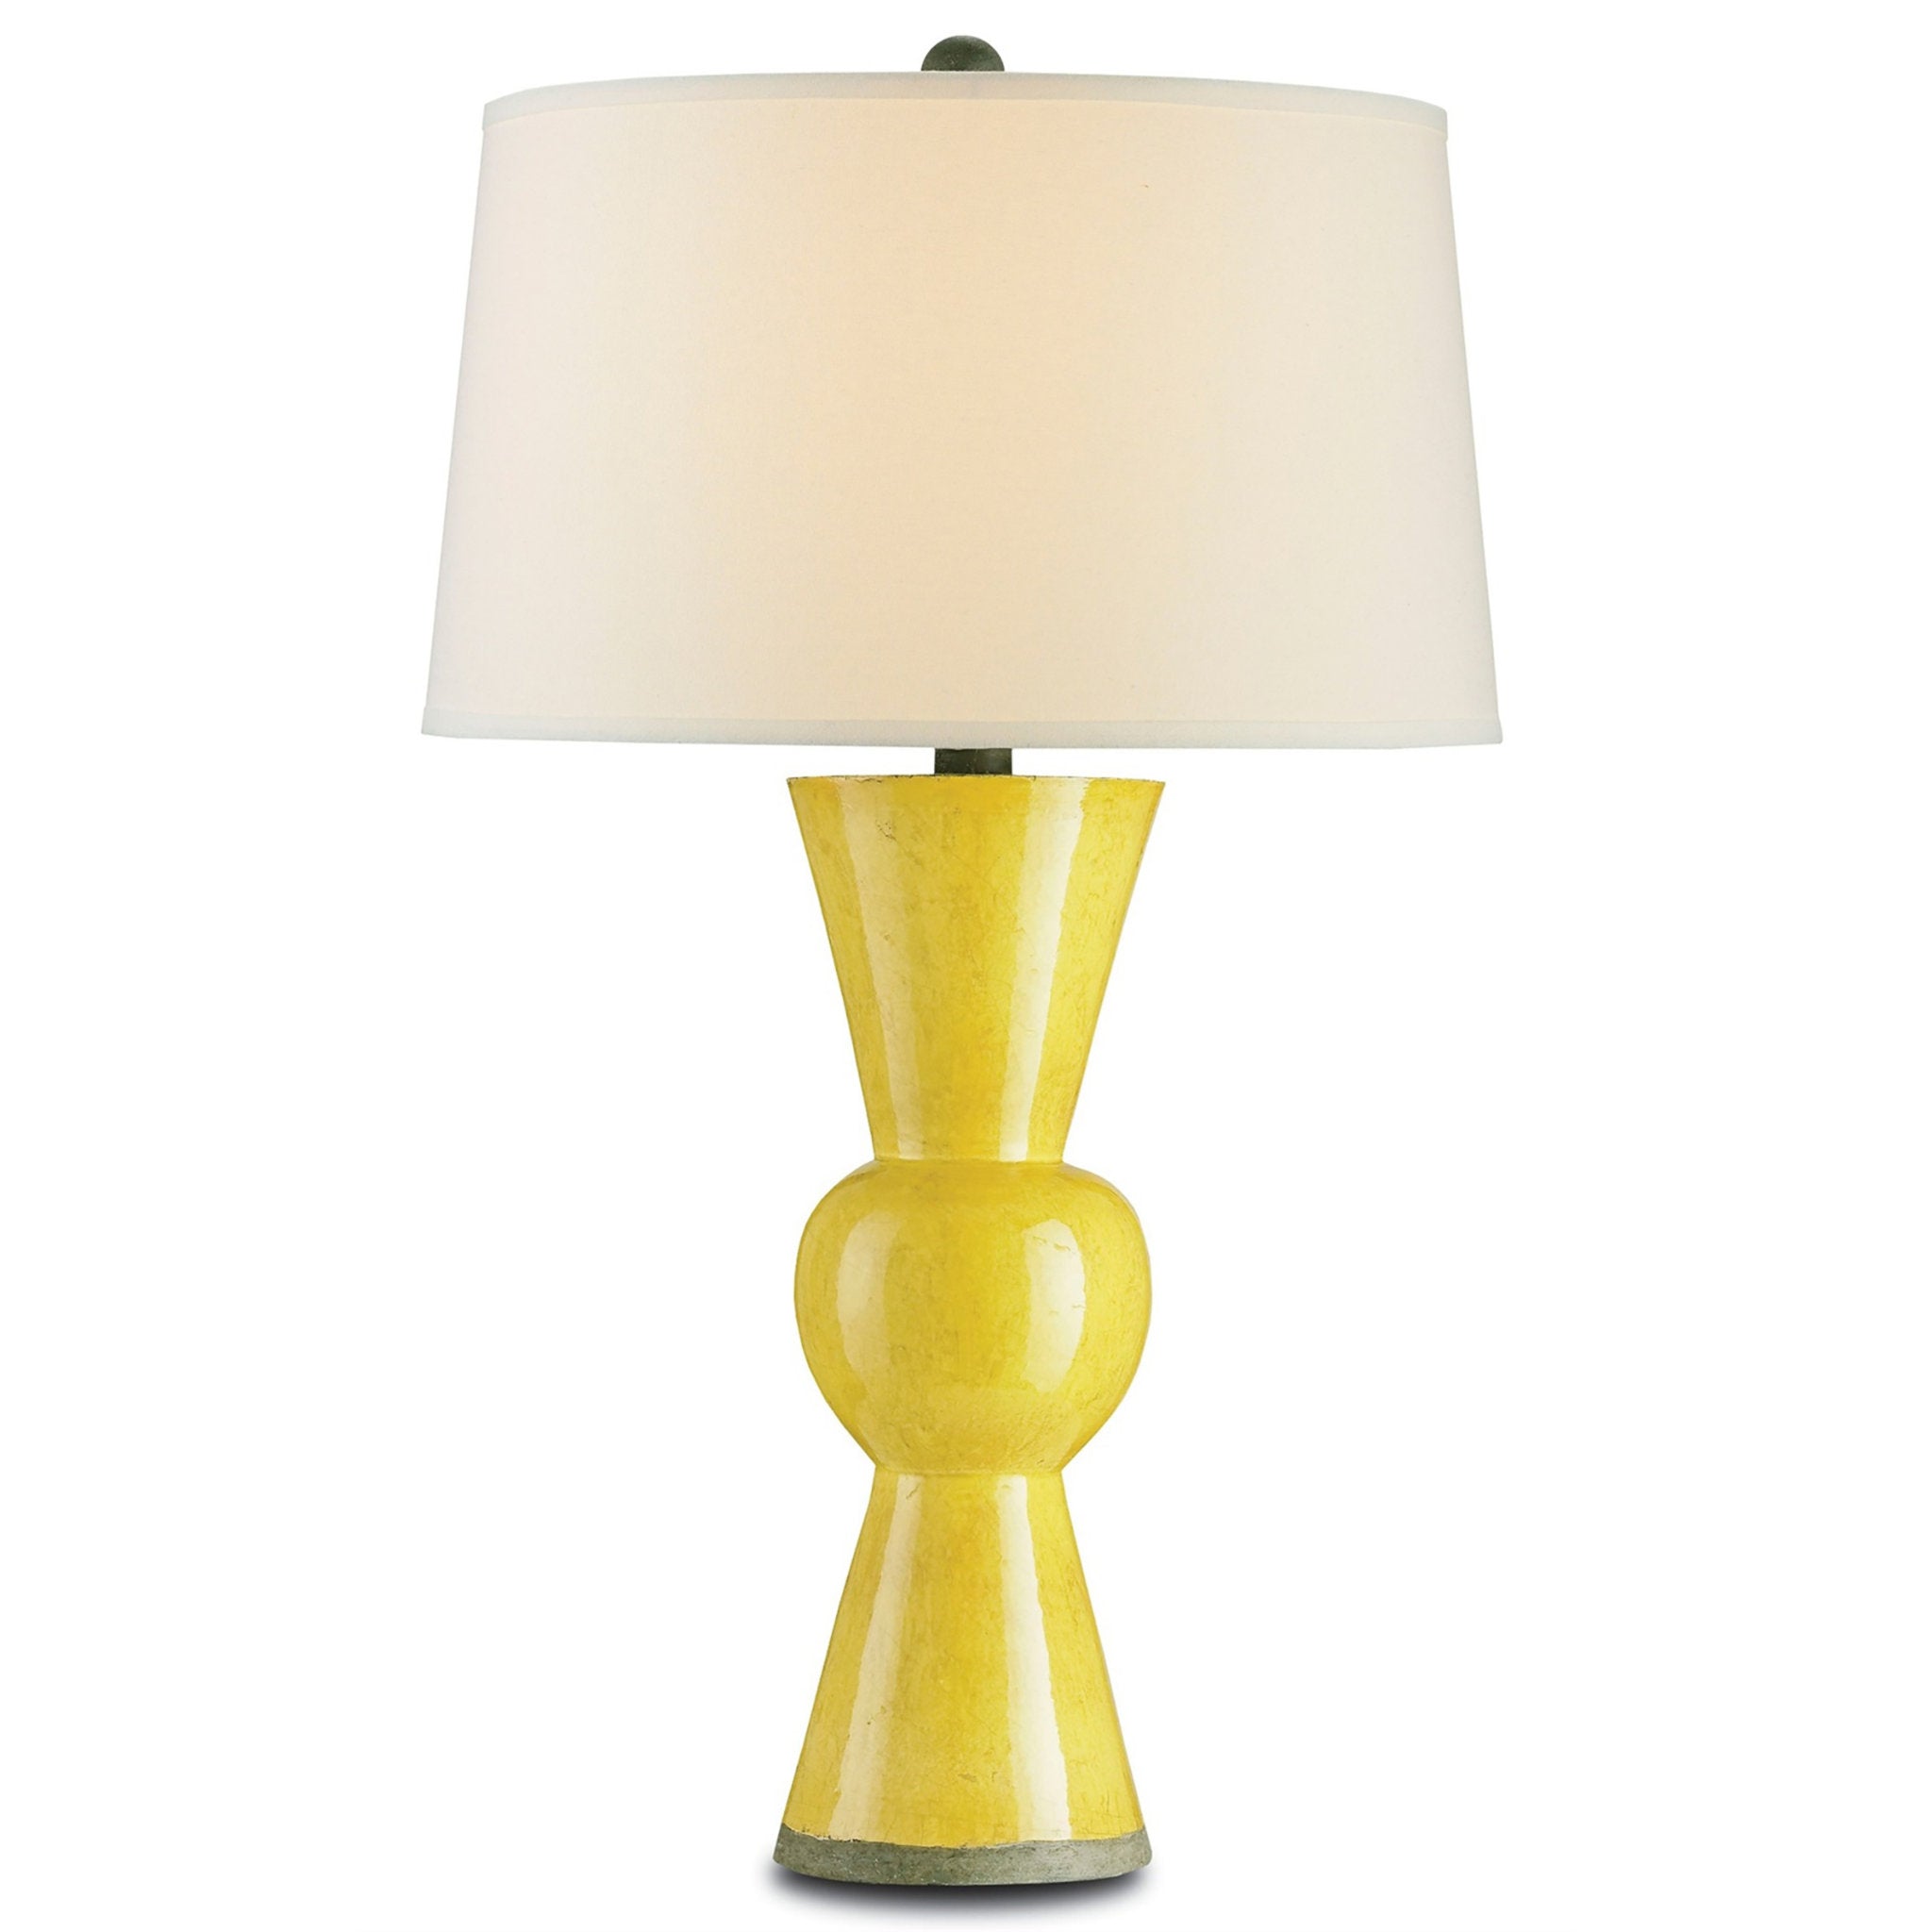 Upbeat Yellow Table Lamp - Yellow